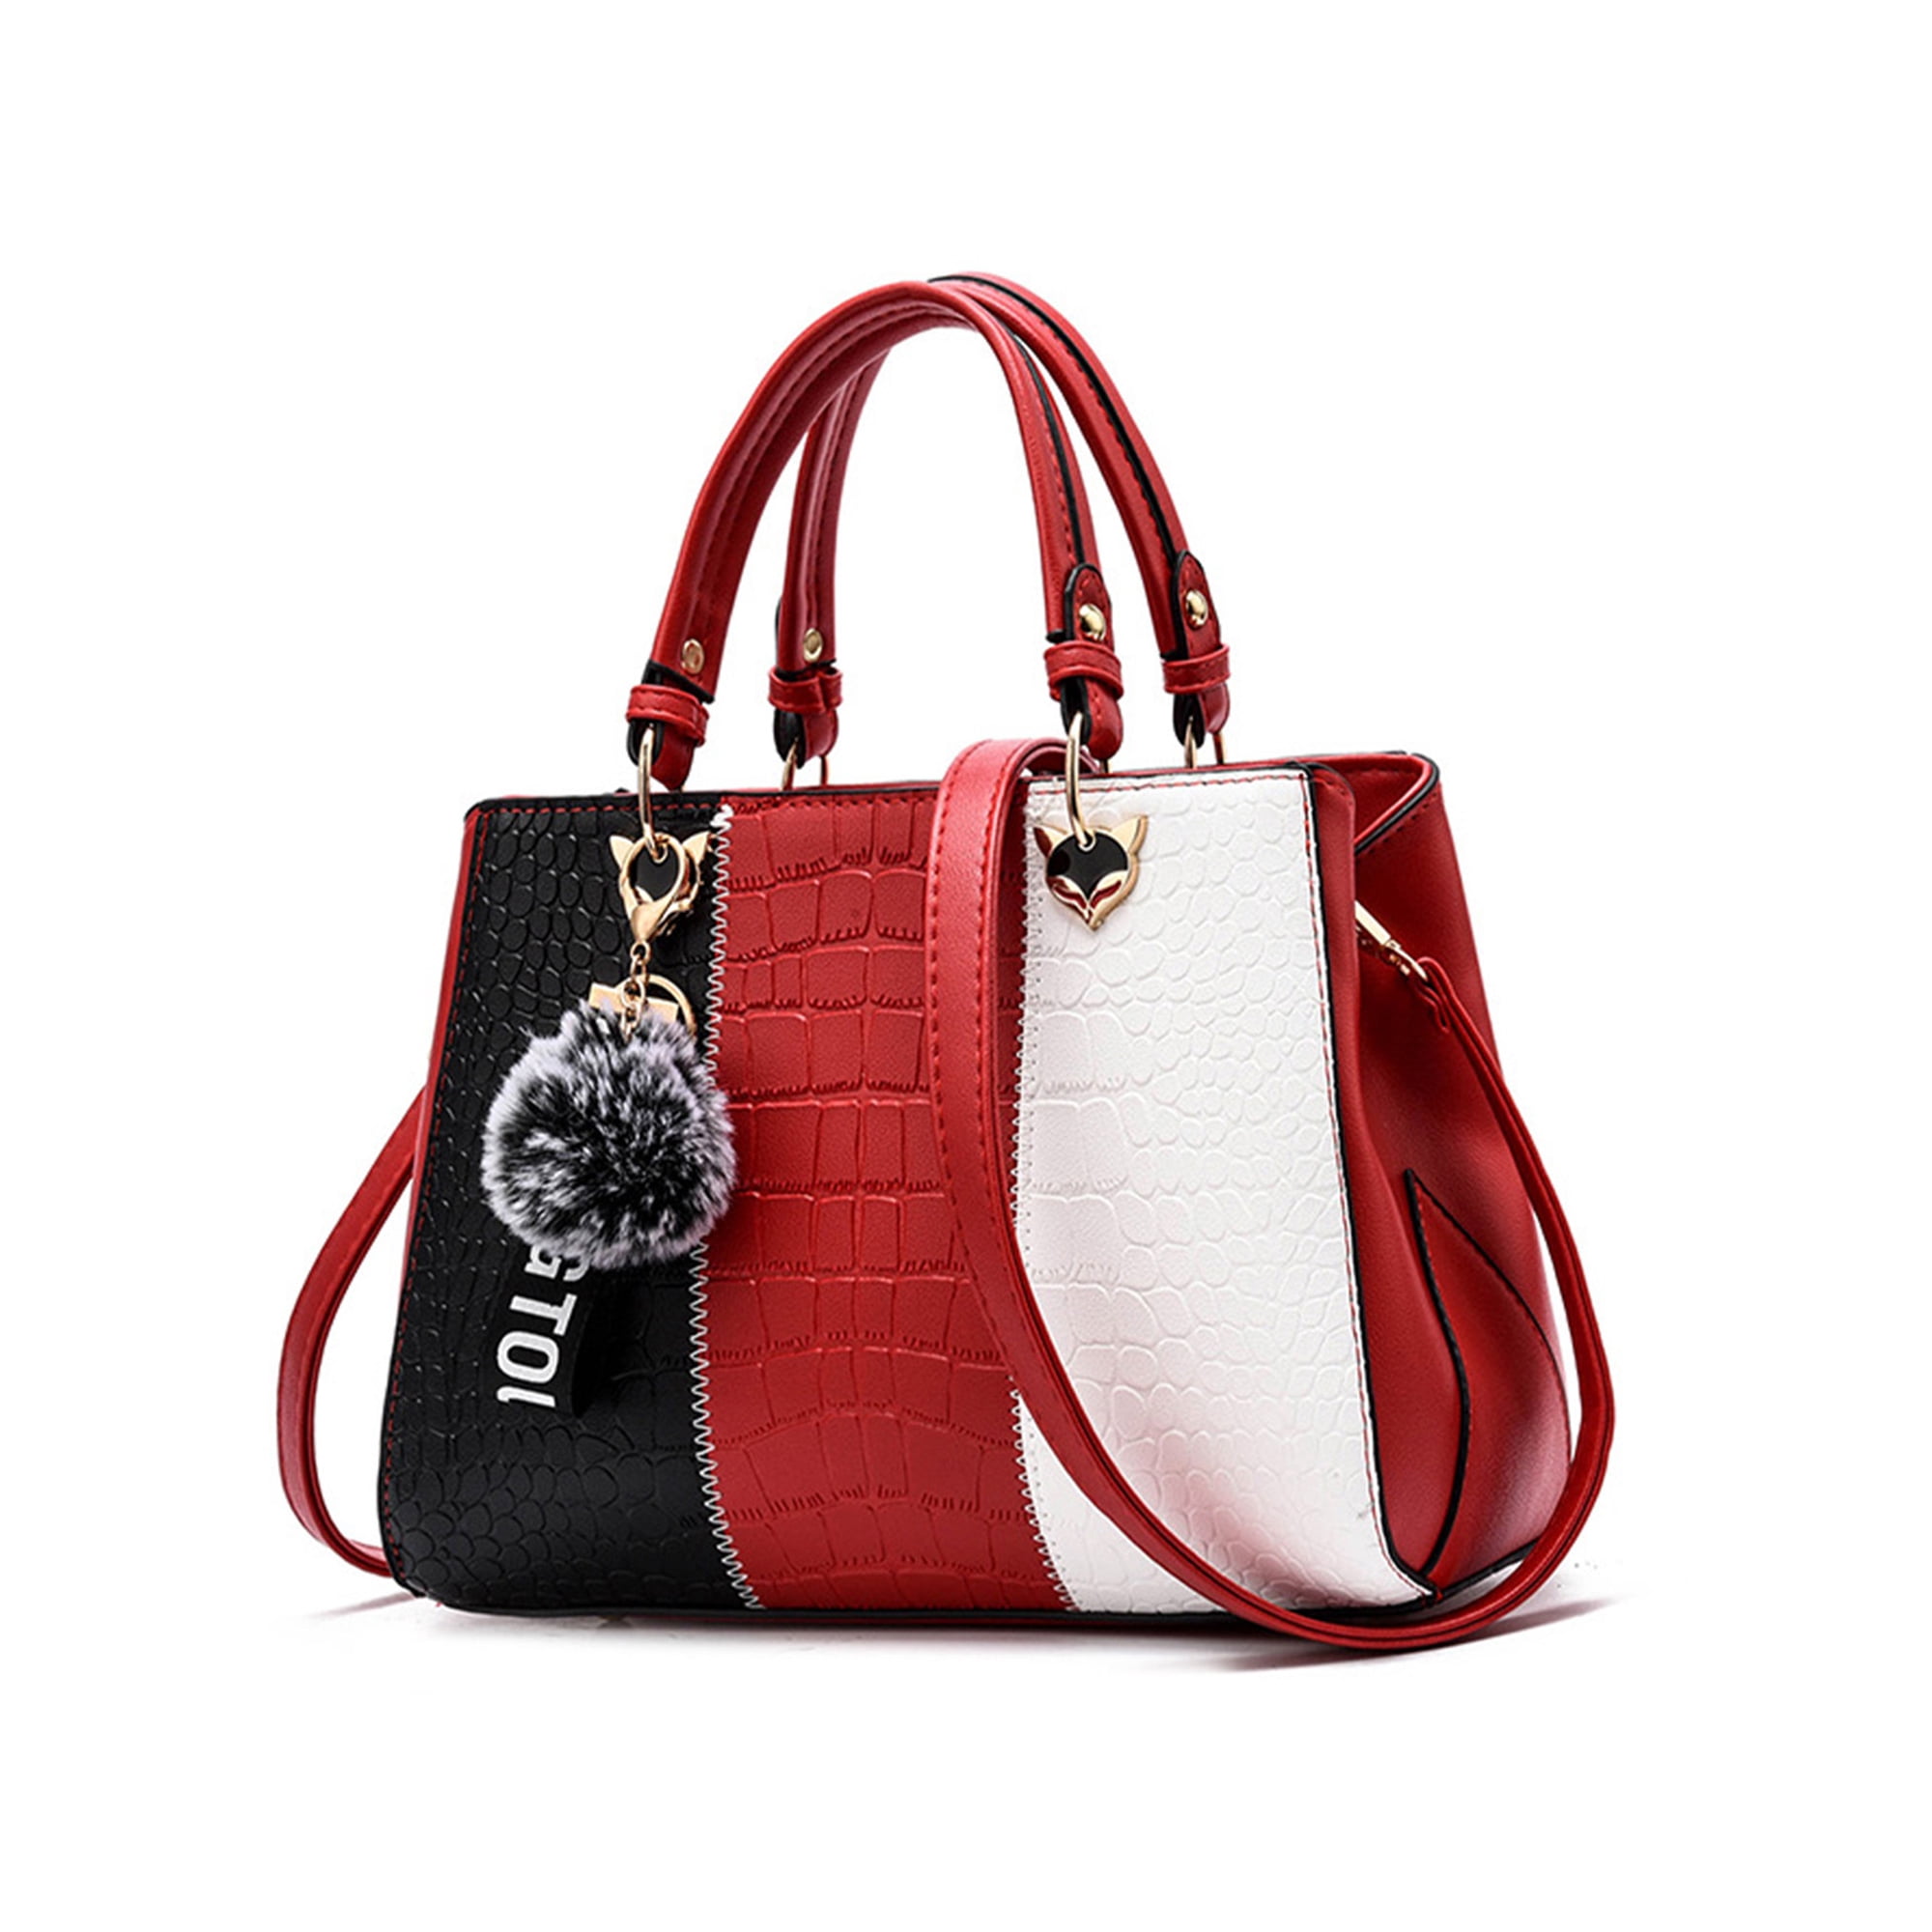 pu leather handbag For Women Large Shoulder Tote Purse Top Handle Satchel